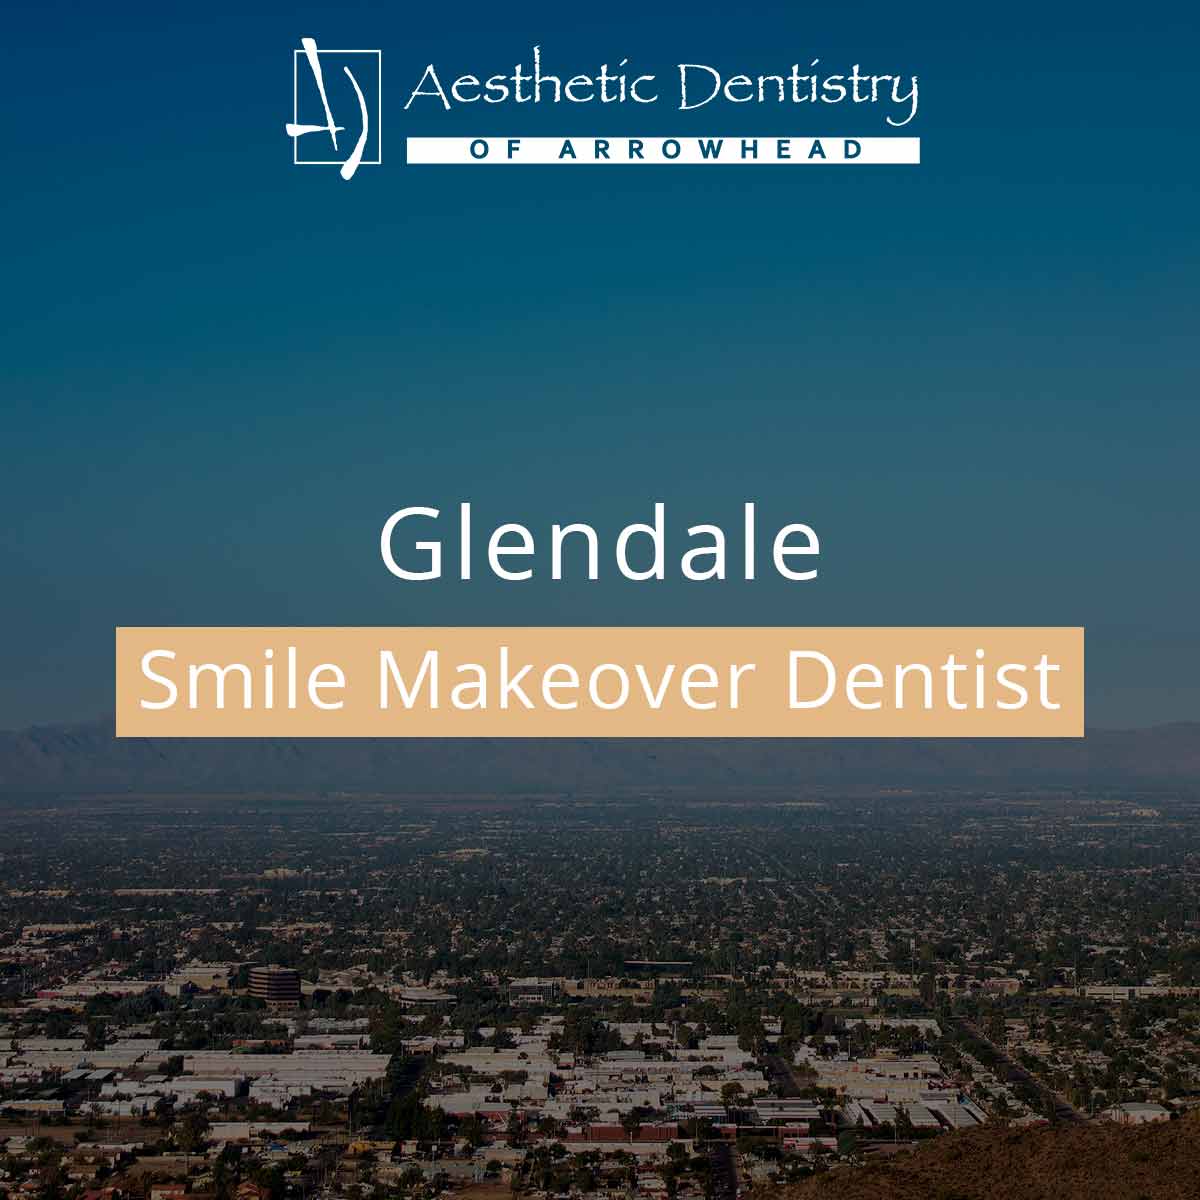 Glendale Smile Makeover Dentist featured image